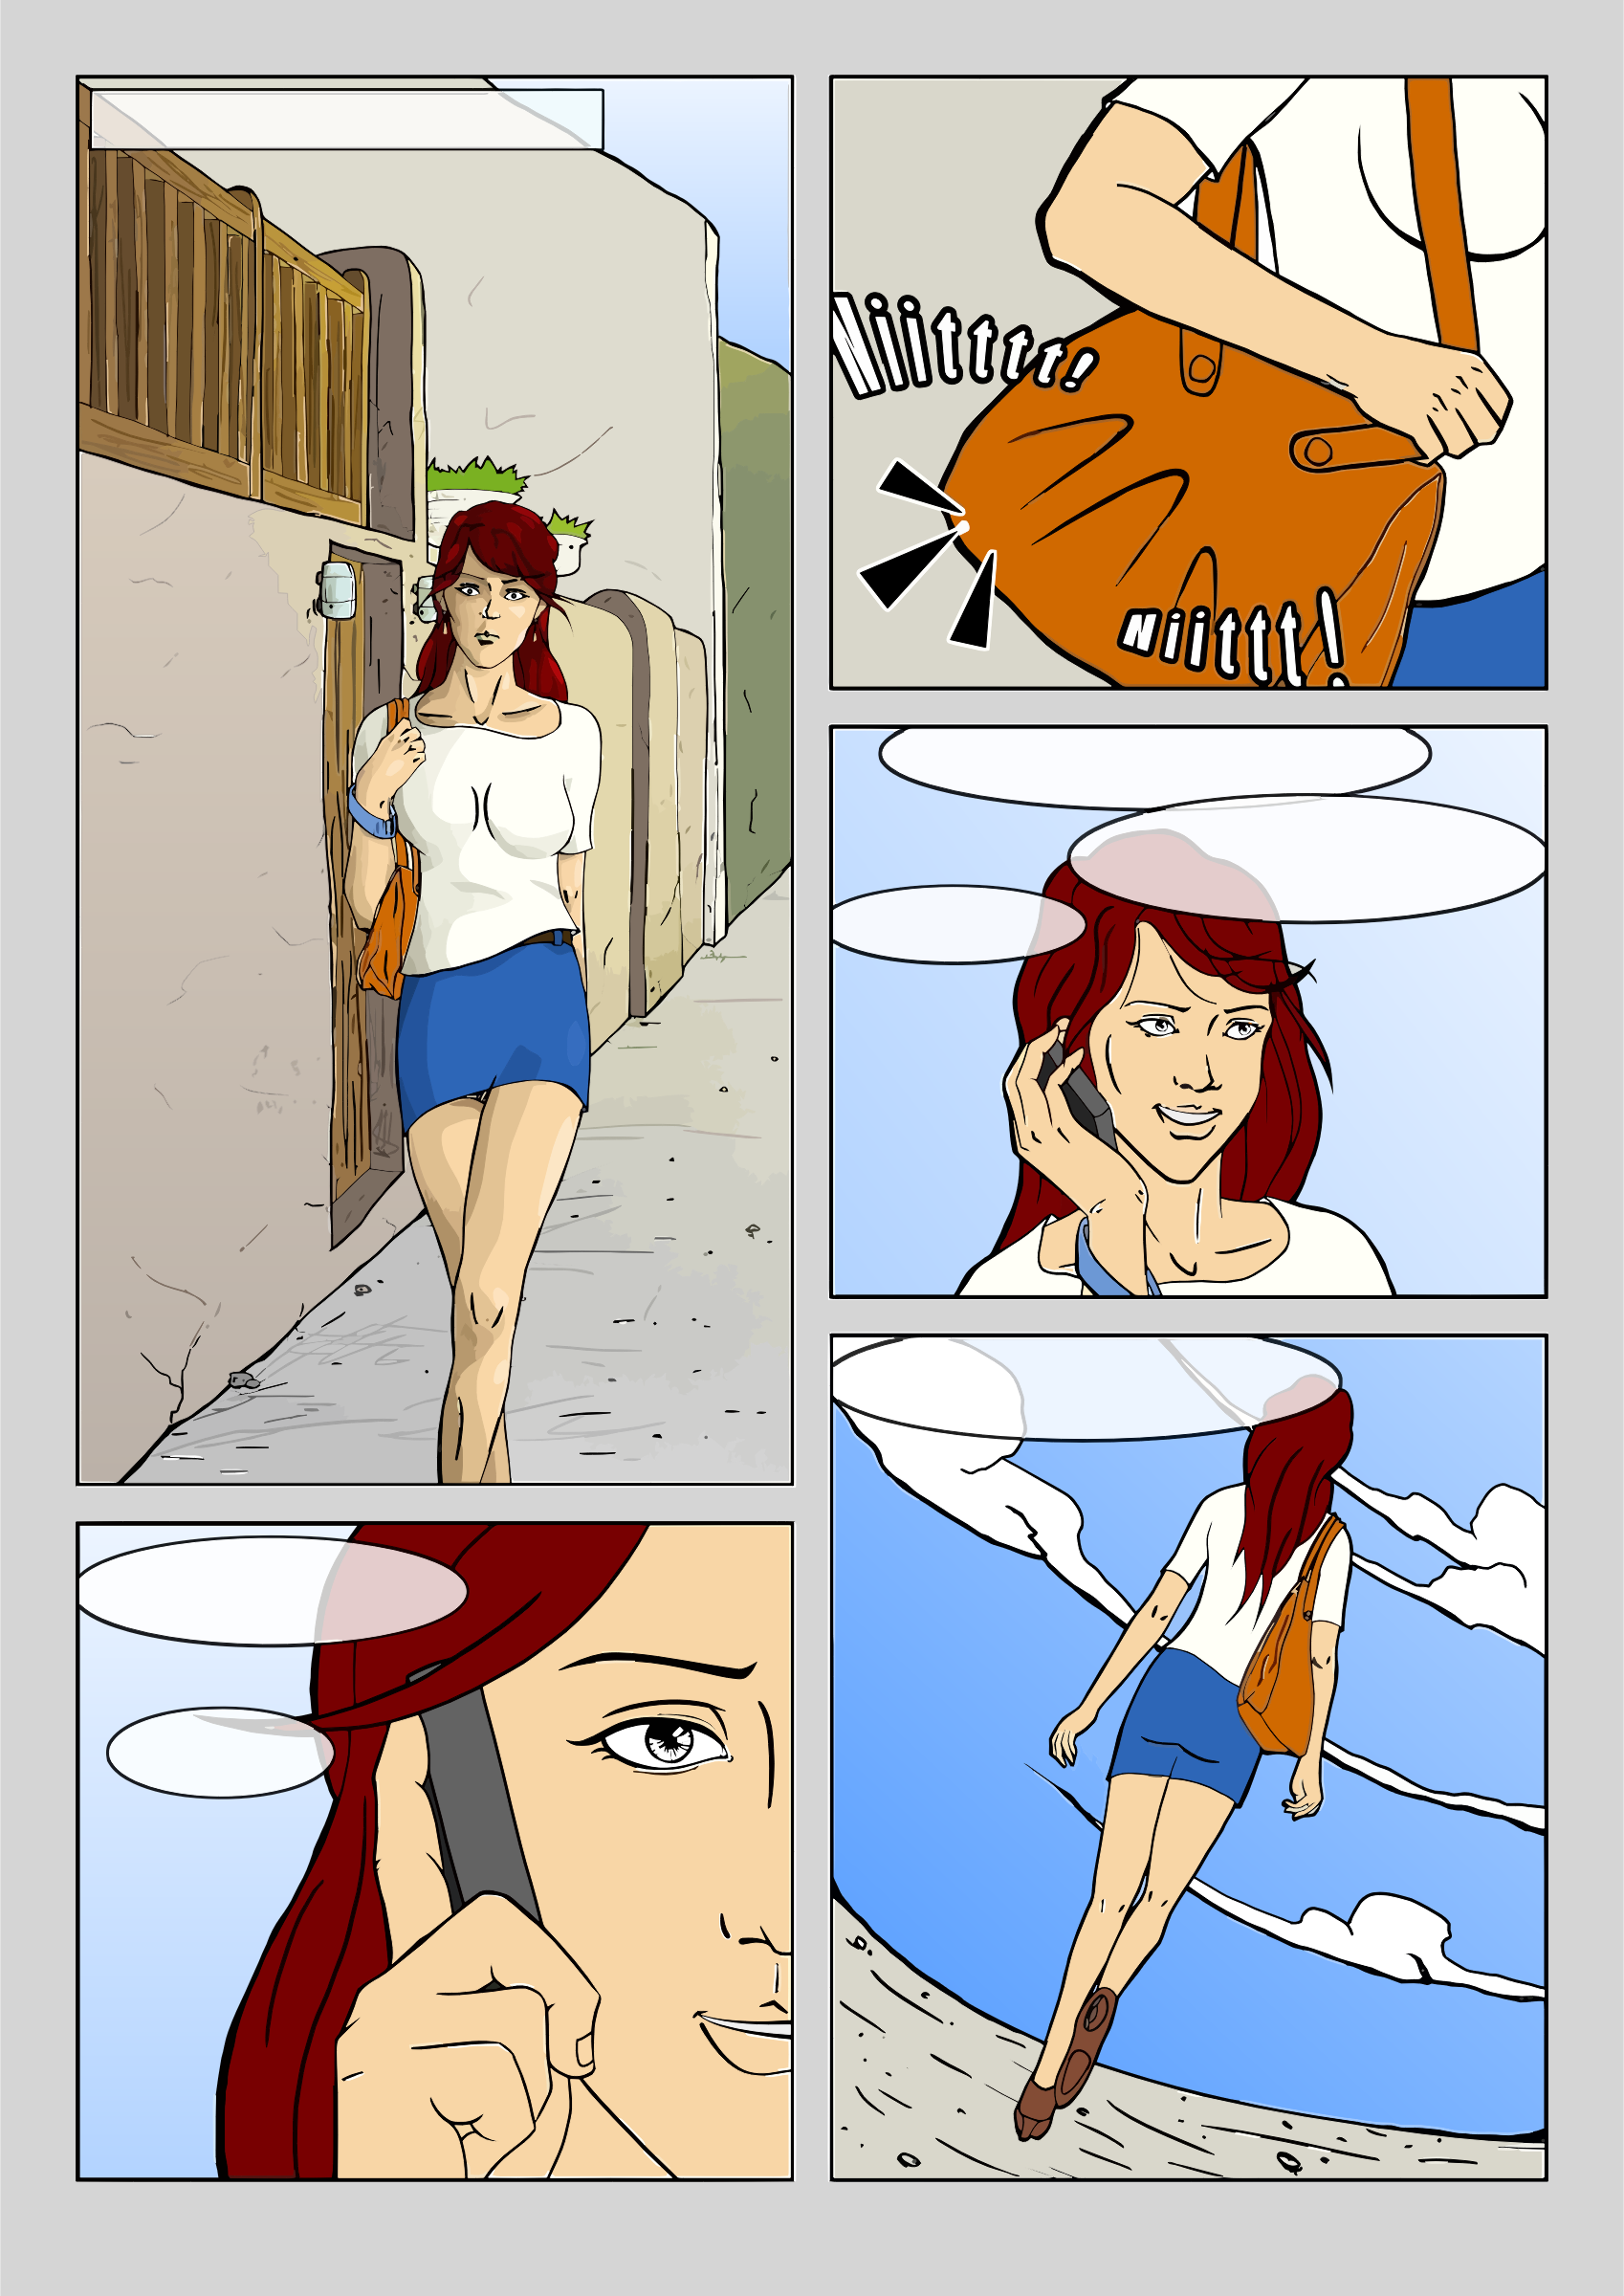 comic strip illustrations of women